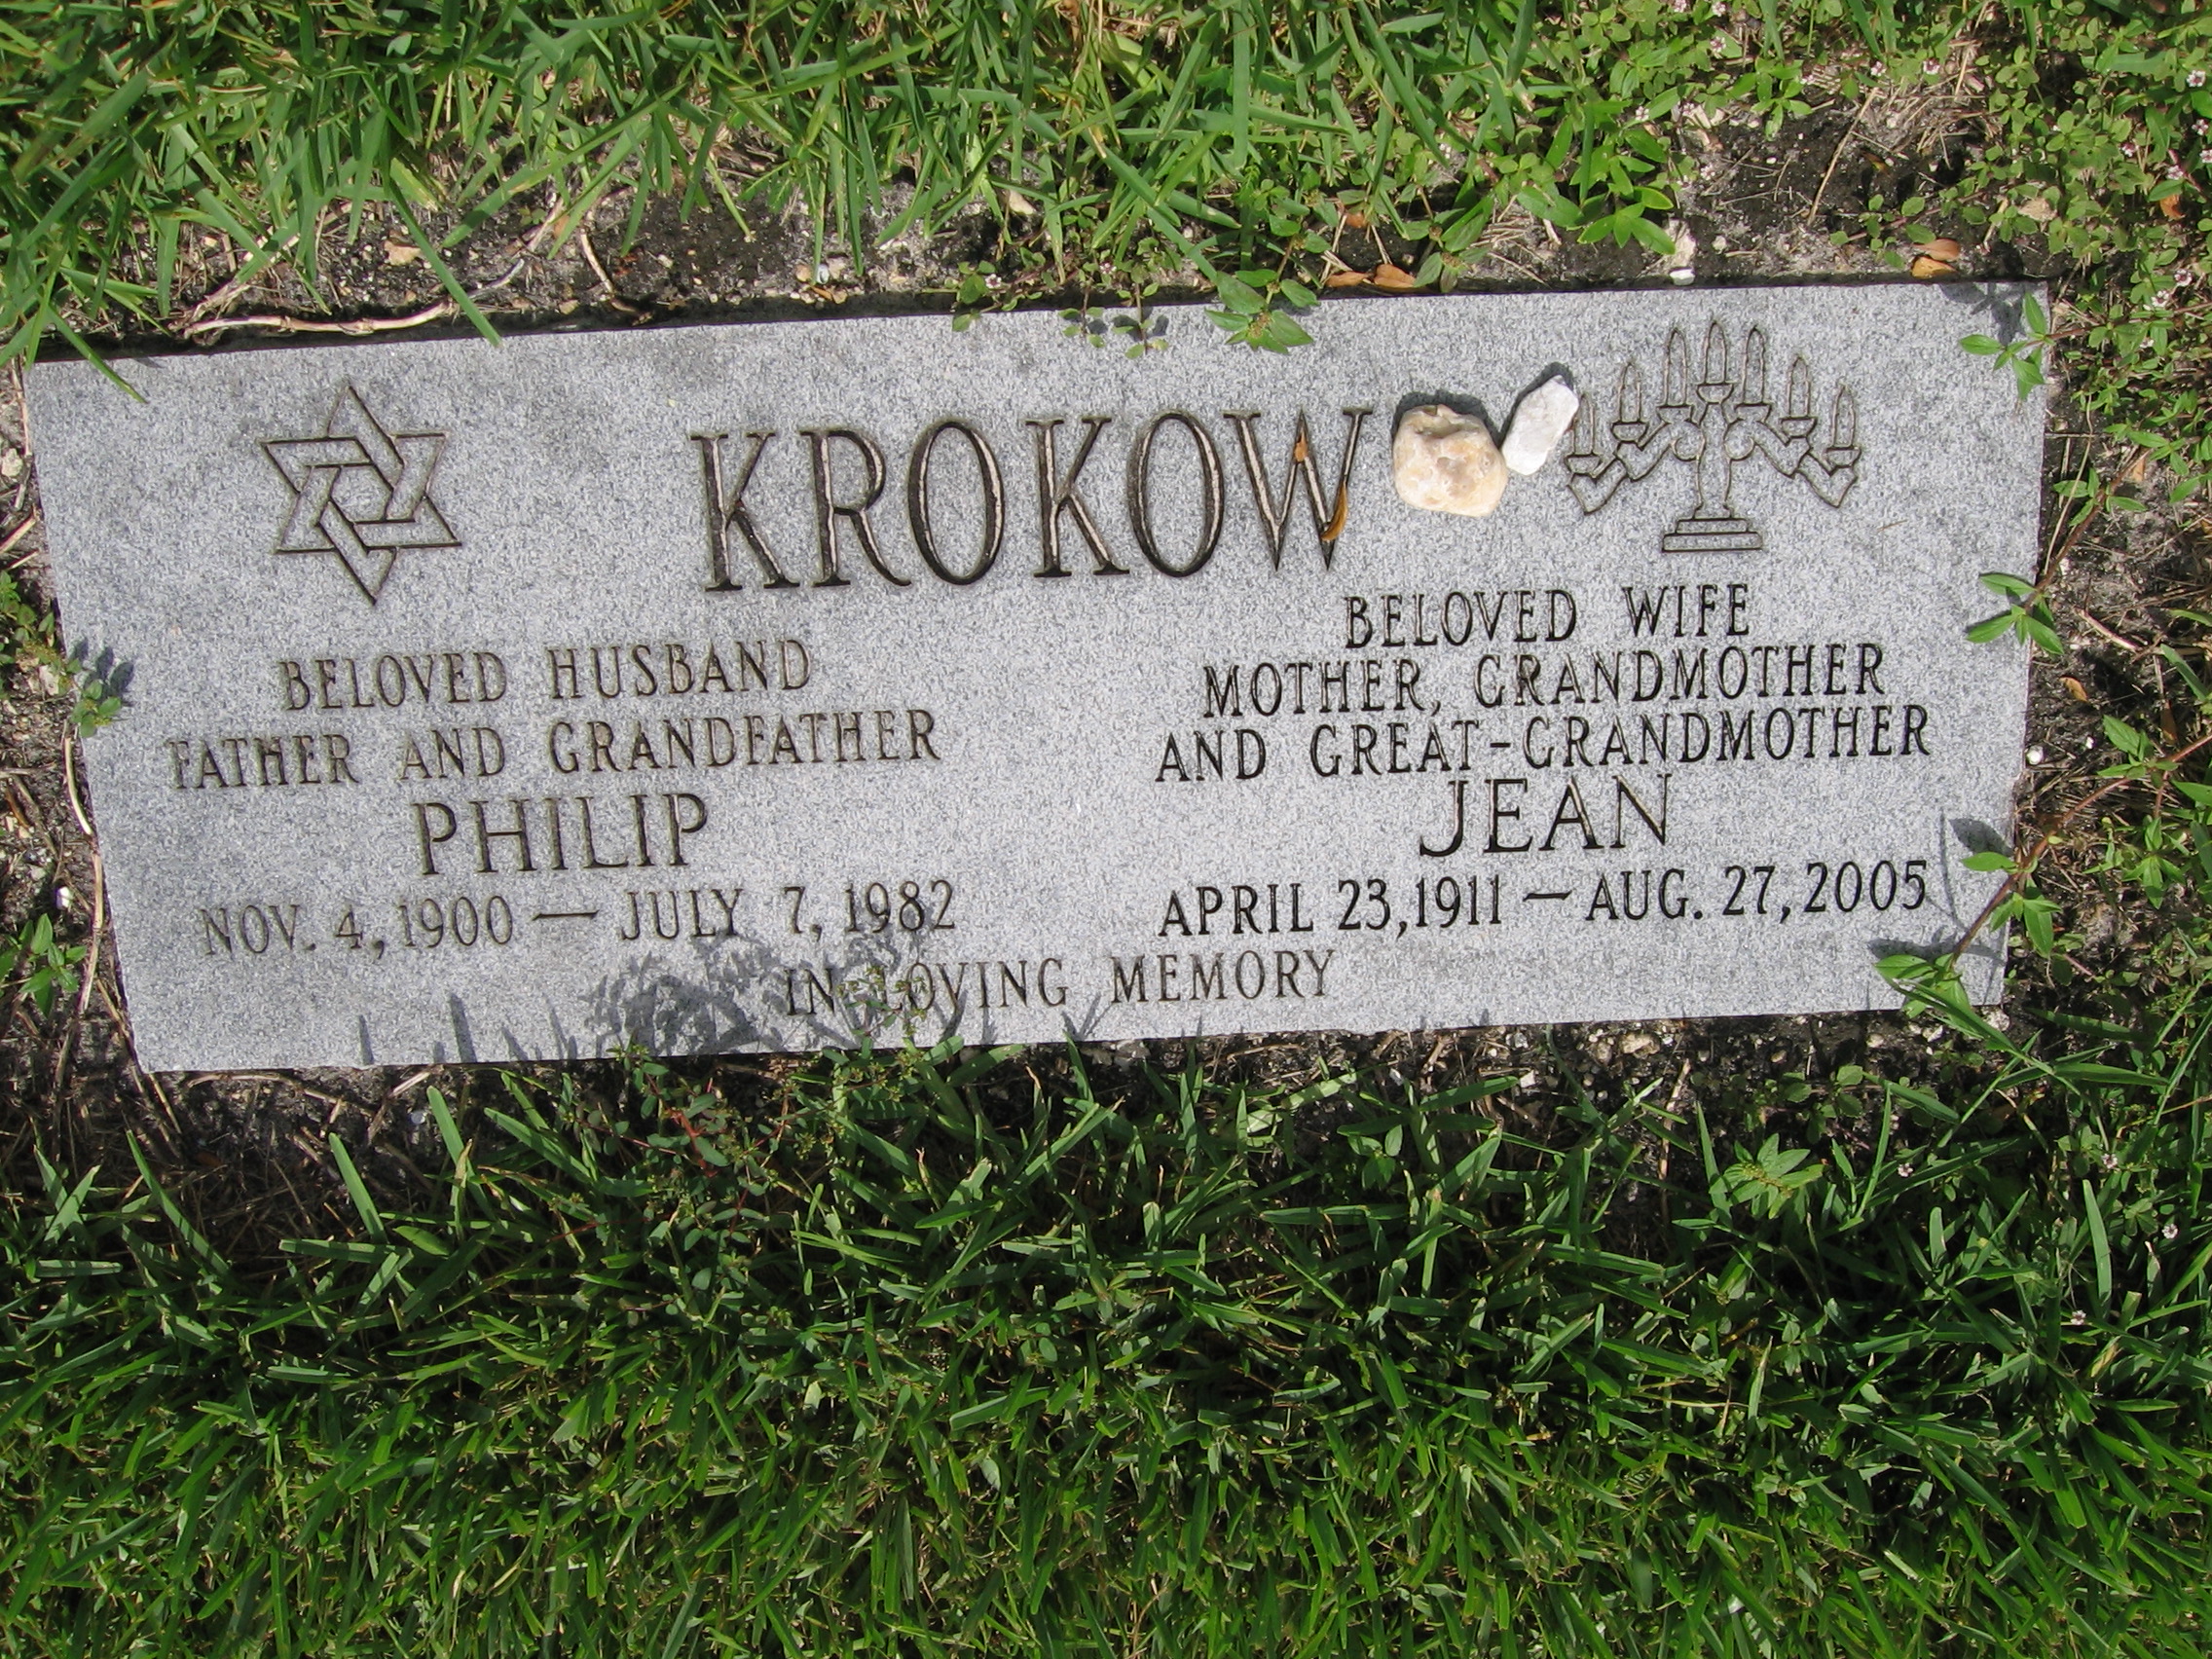 Philip Krokow